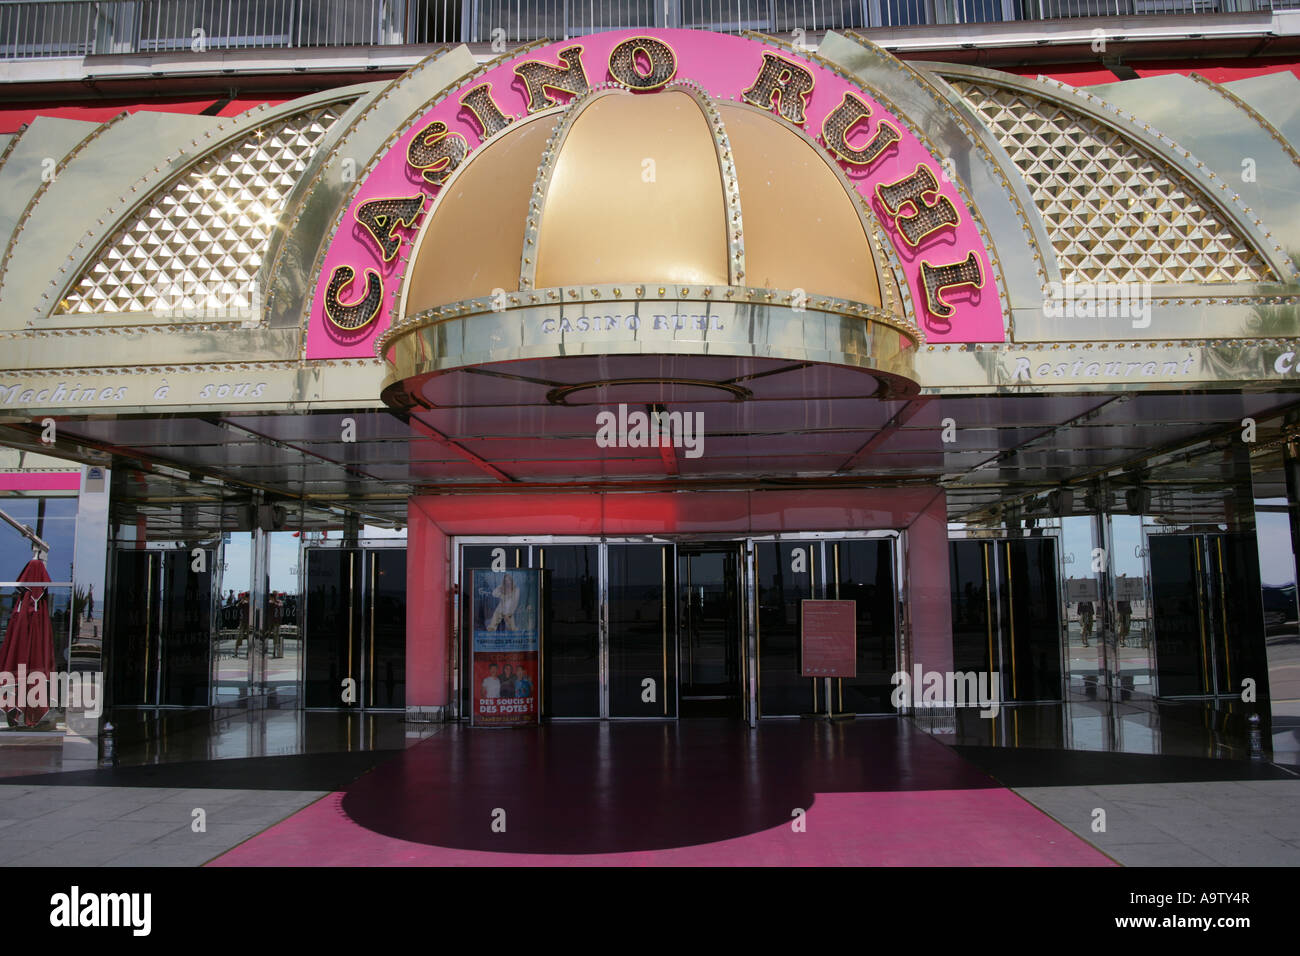 Casino Ruhl, Nizza Frankreich Stockfoto